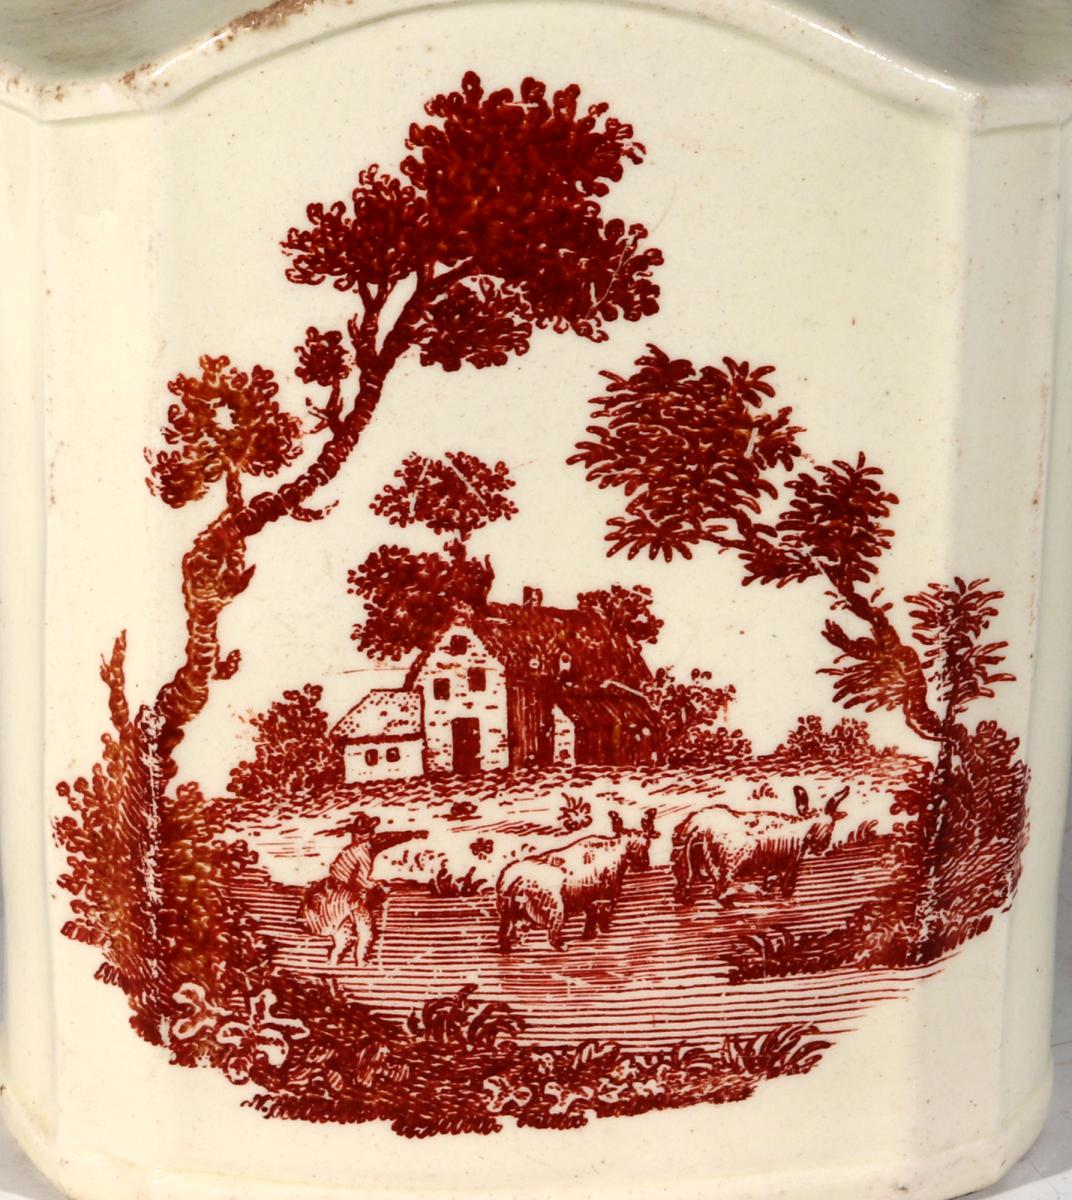 18th Century Creamware Red-printed Tea Caddy, Circa 1765-75